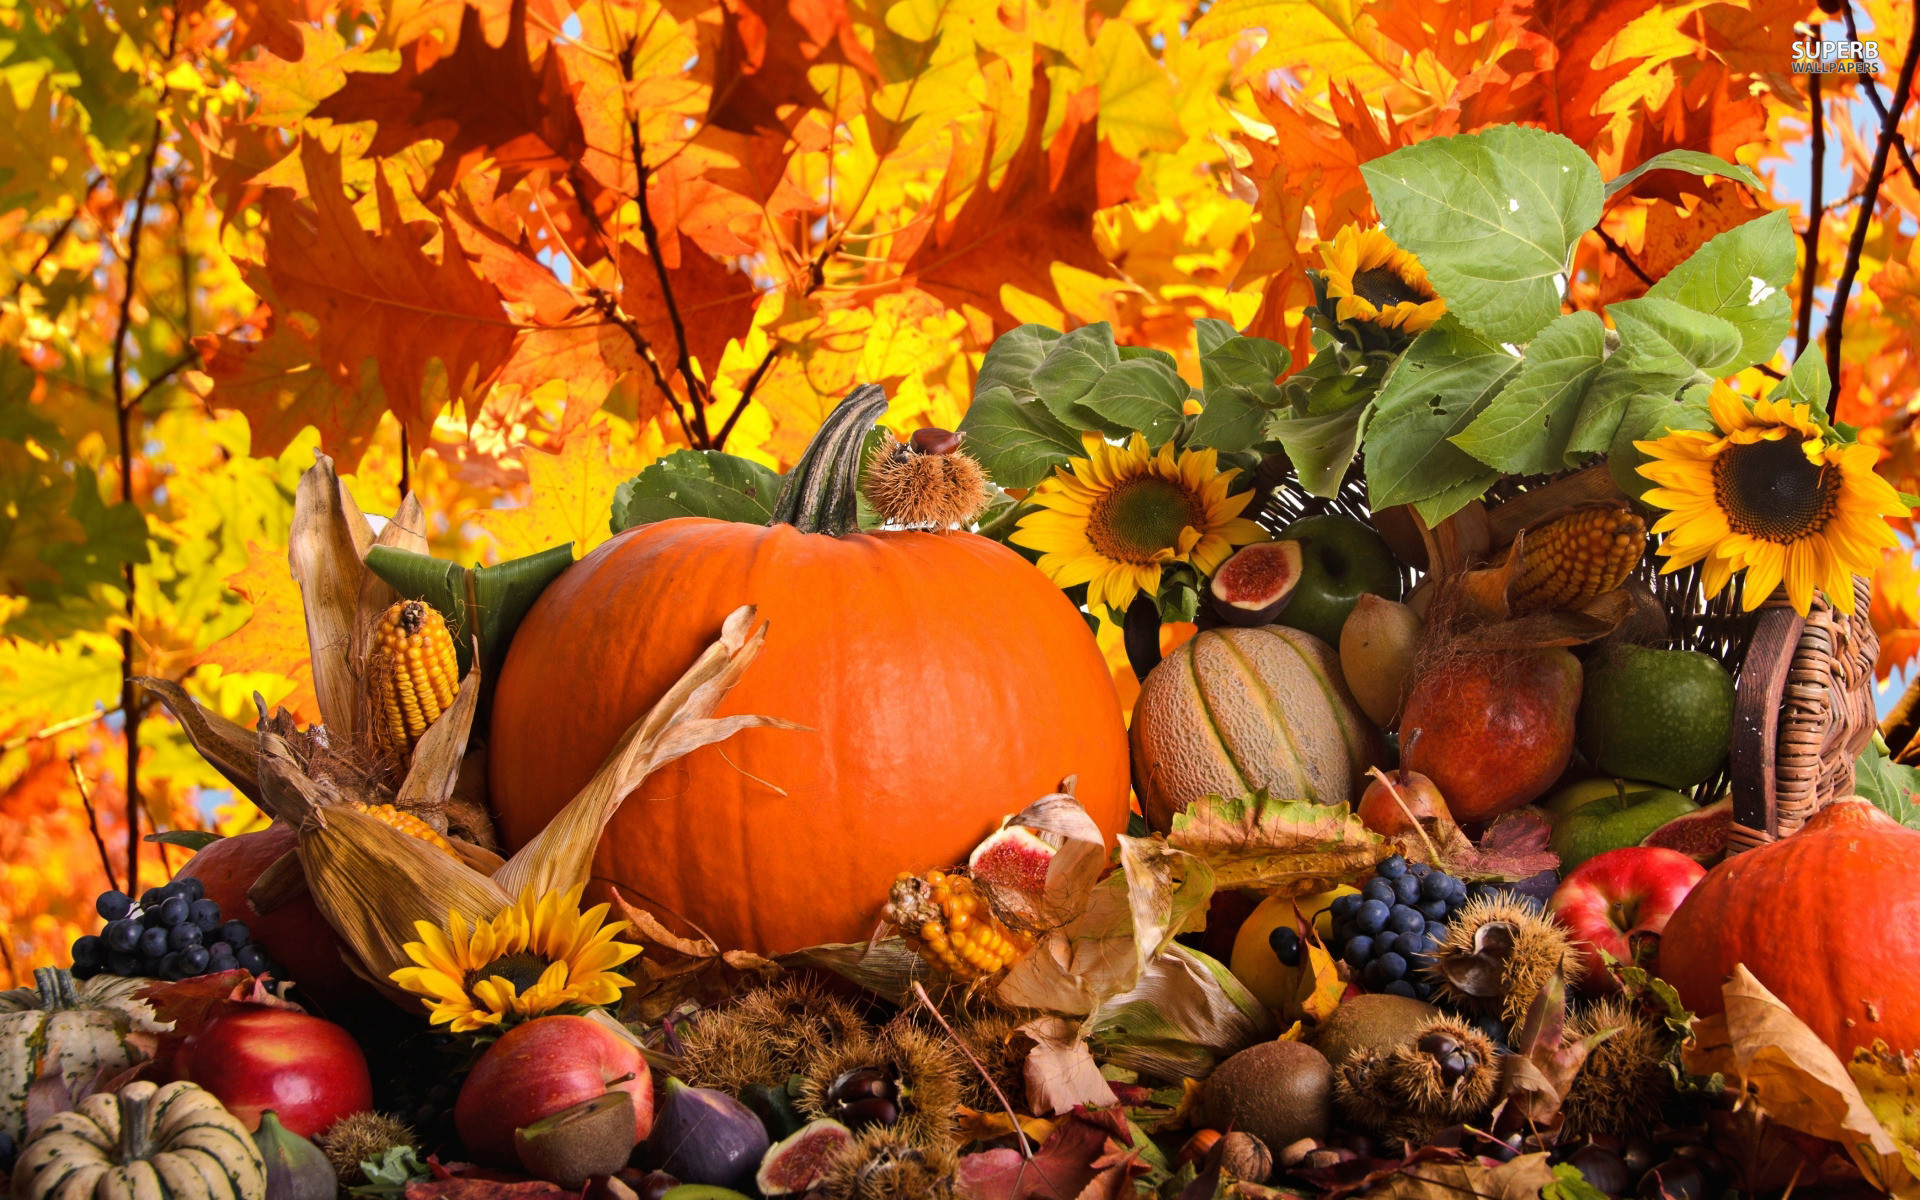 1920x1200 Autumn Pumpkin Thanksgiving Background Stock Photo - Image: 44897024